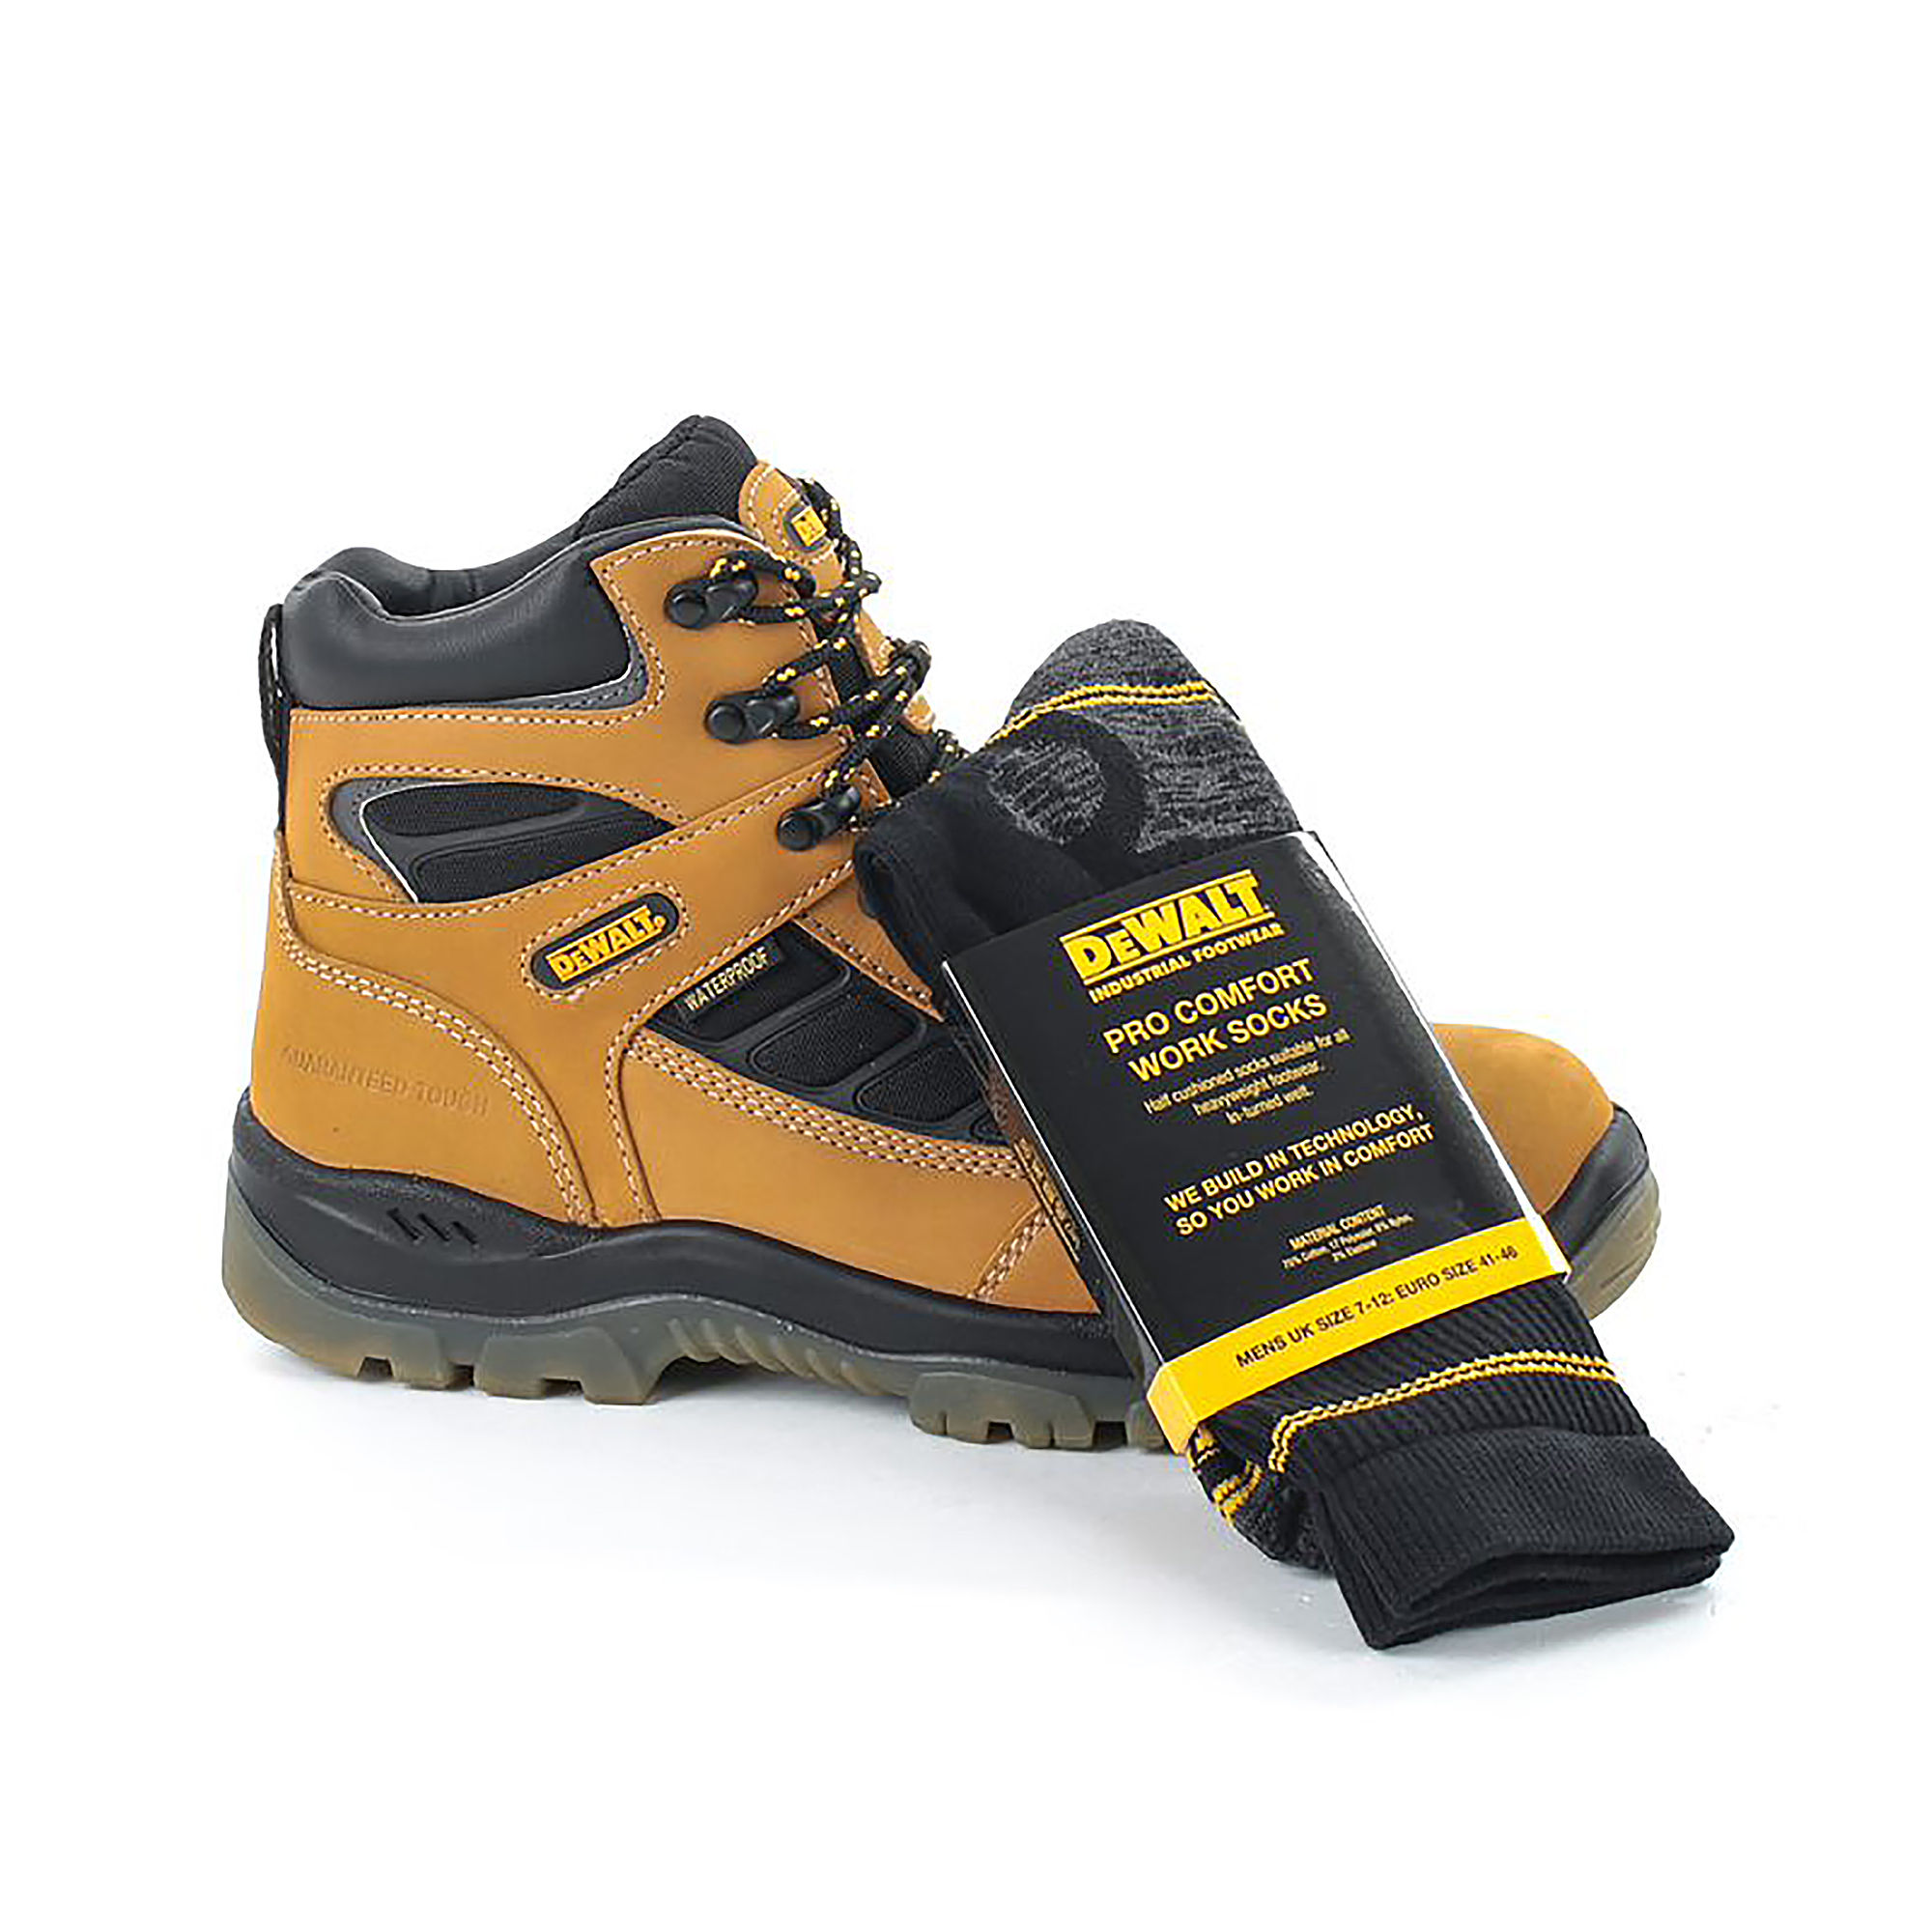 DeWalt Harwich Waterproof Safety Hiker Boots with Comfort Work Socks